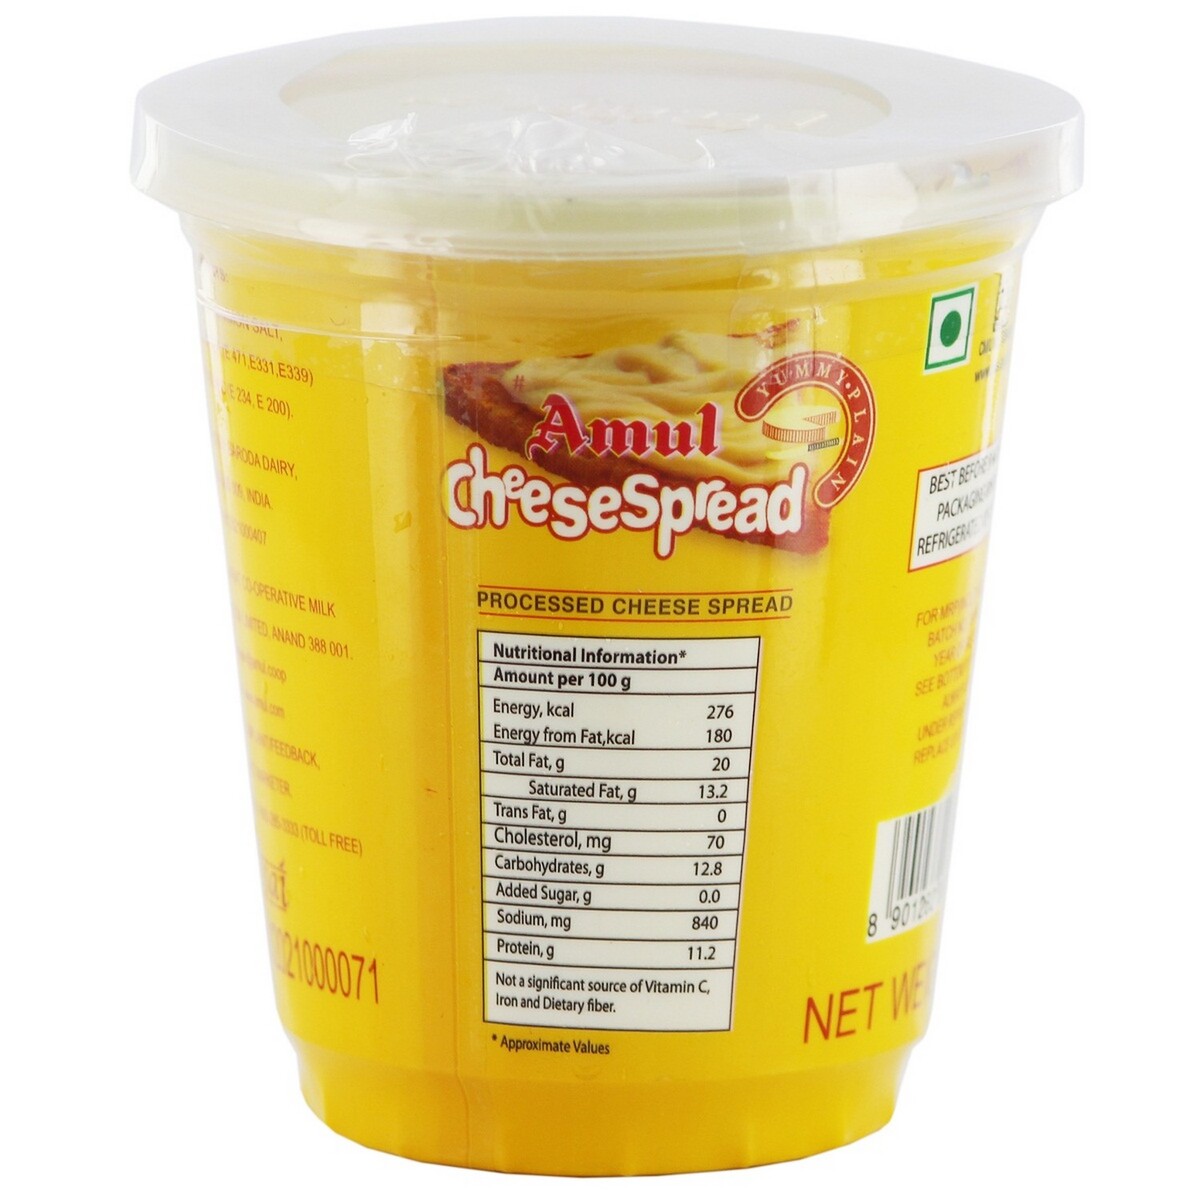 Amul Cheese Spread 400g